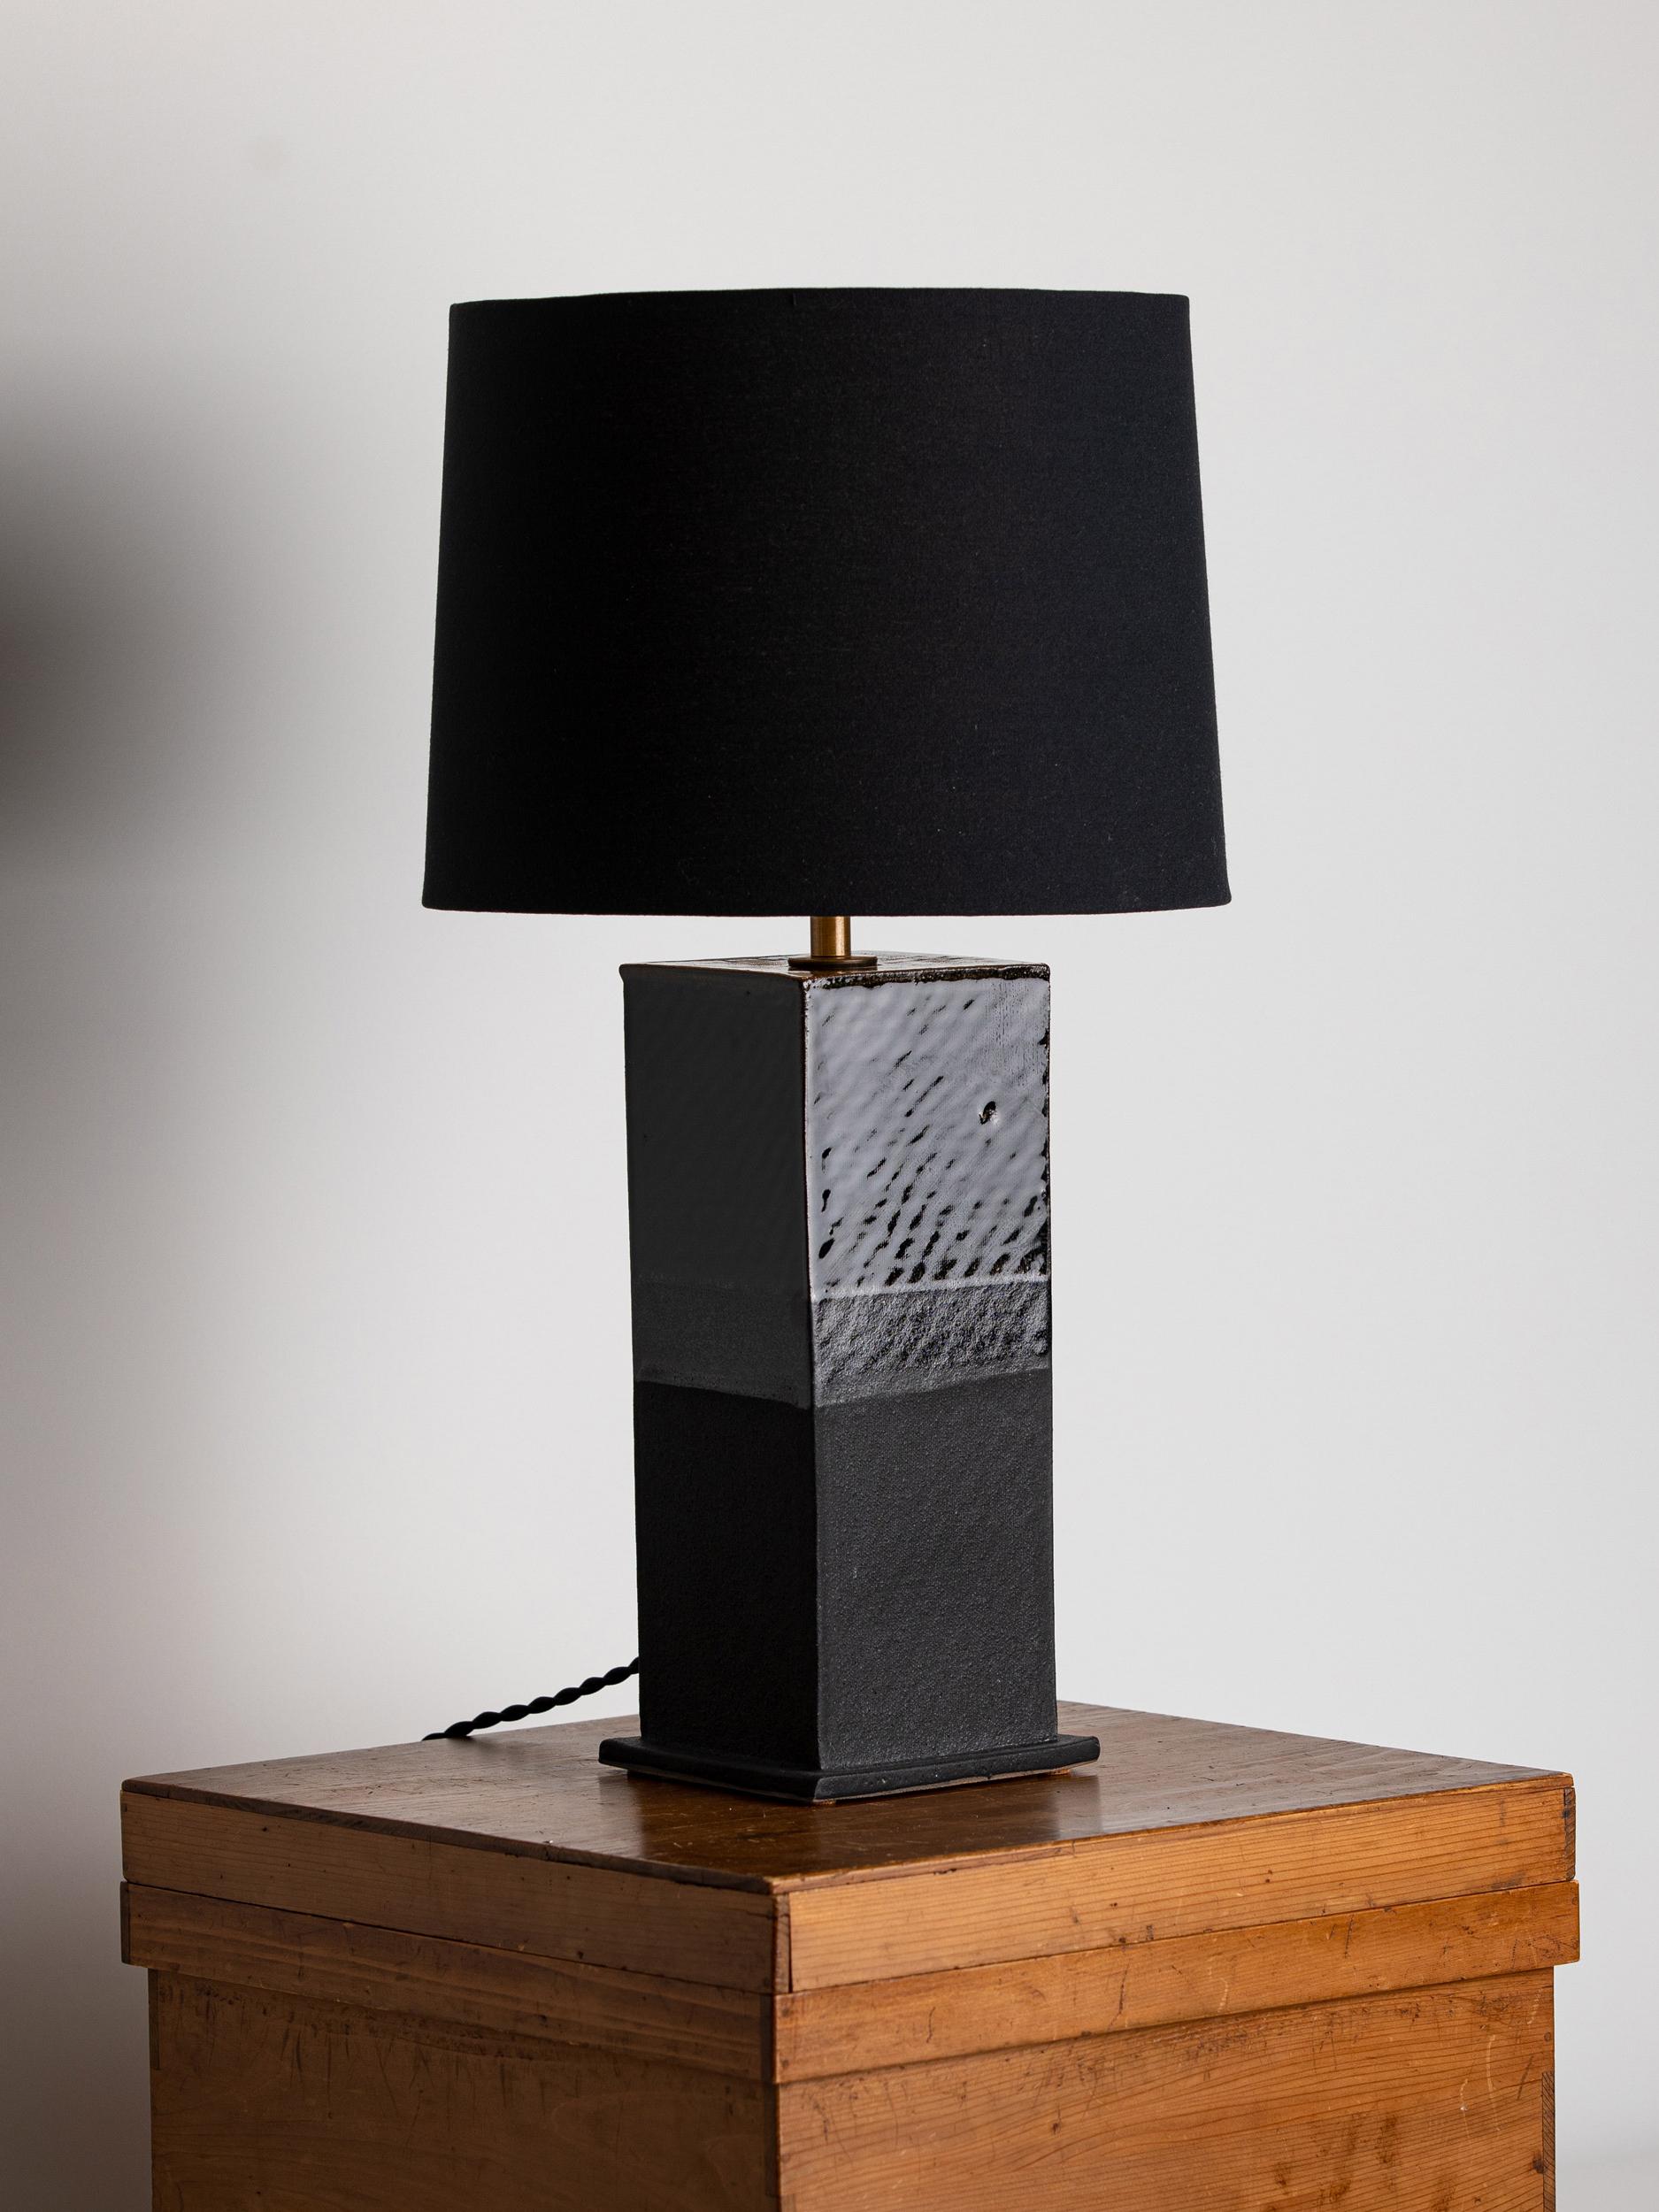 Modern Sag Harbor Lamp, Ceramic Sculptural Table Lamp by Dumais Made